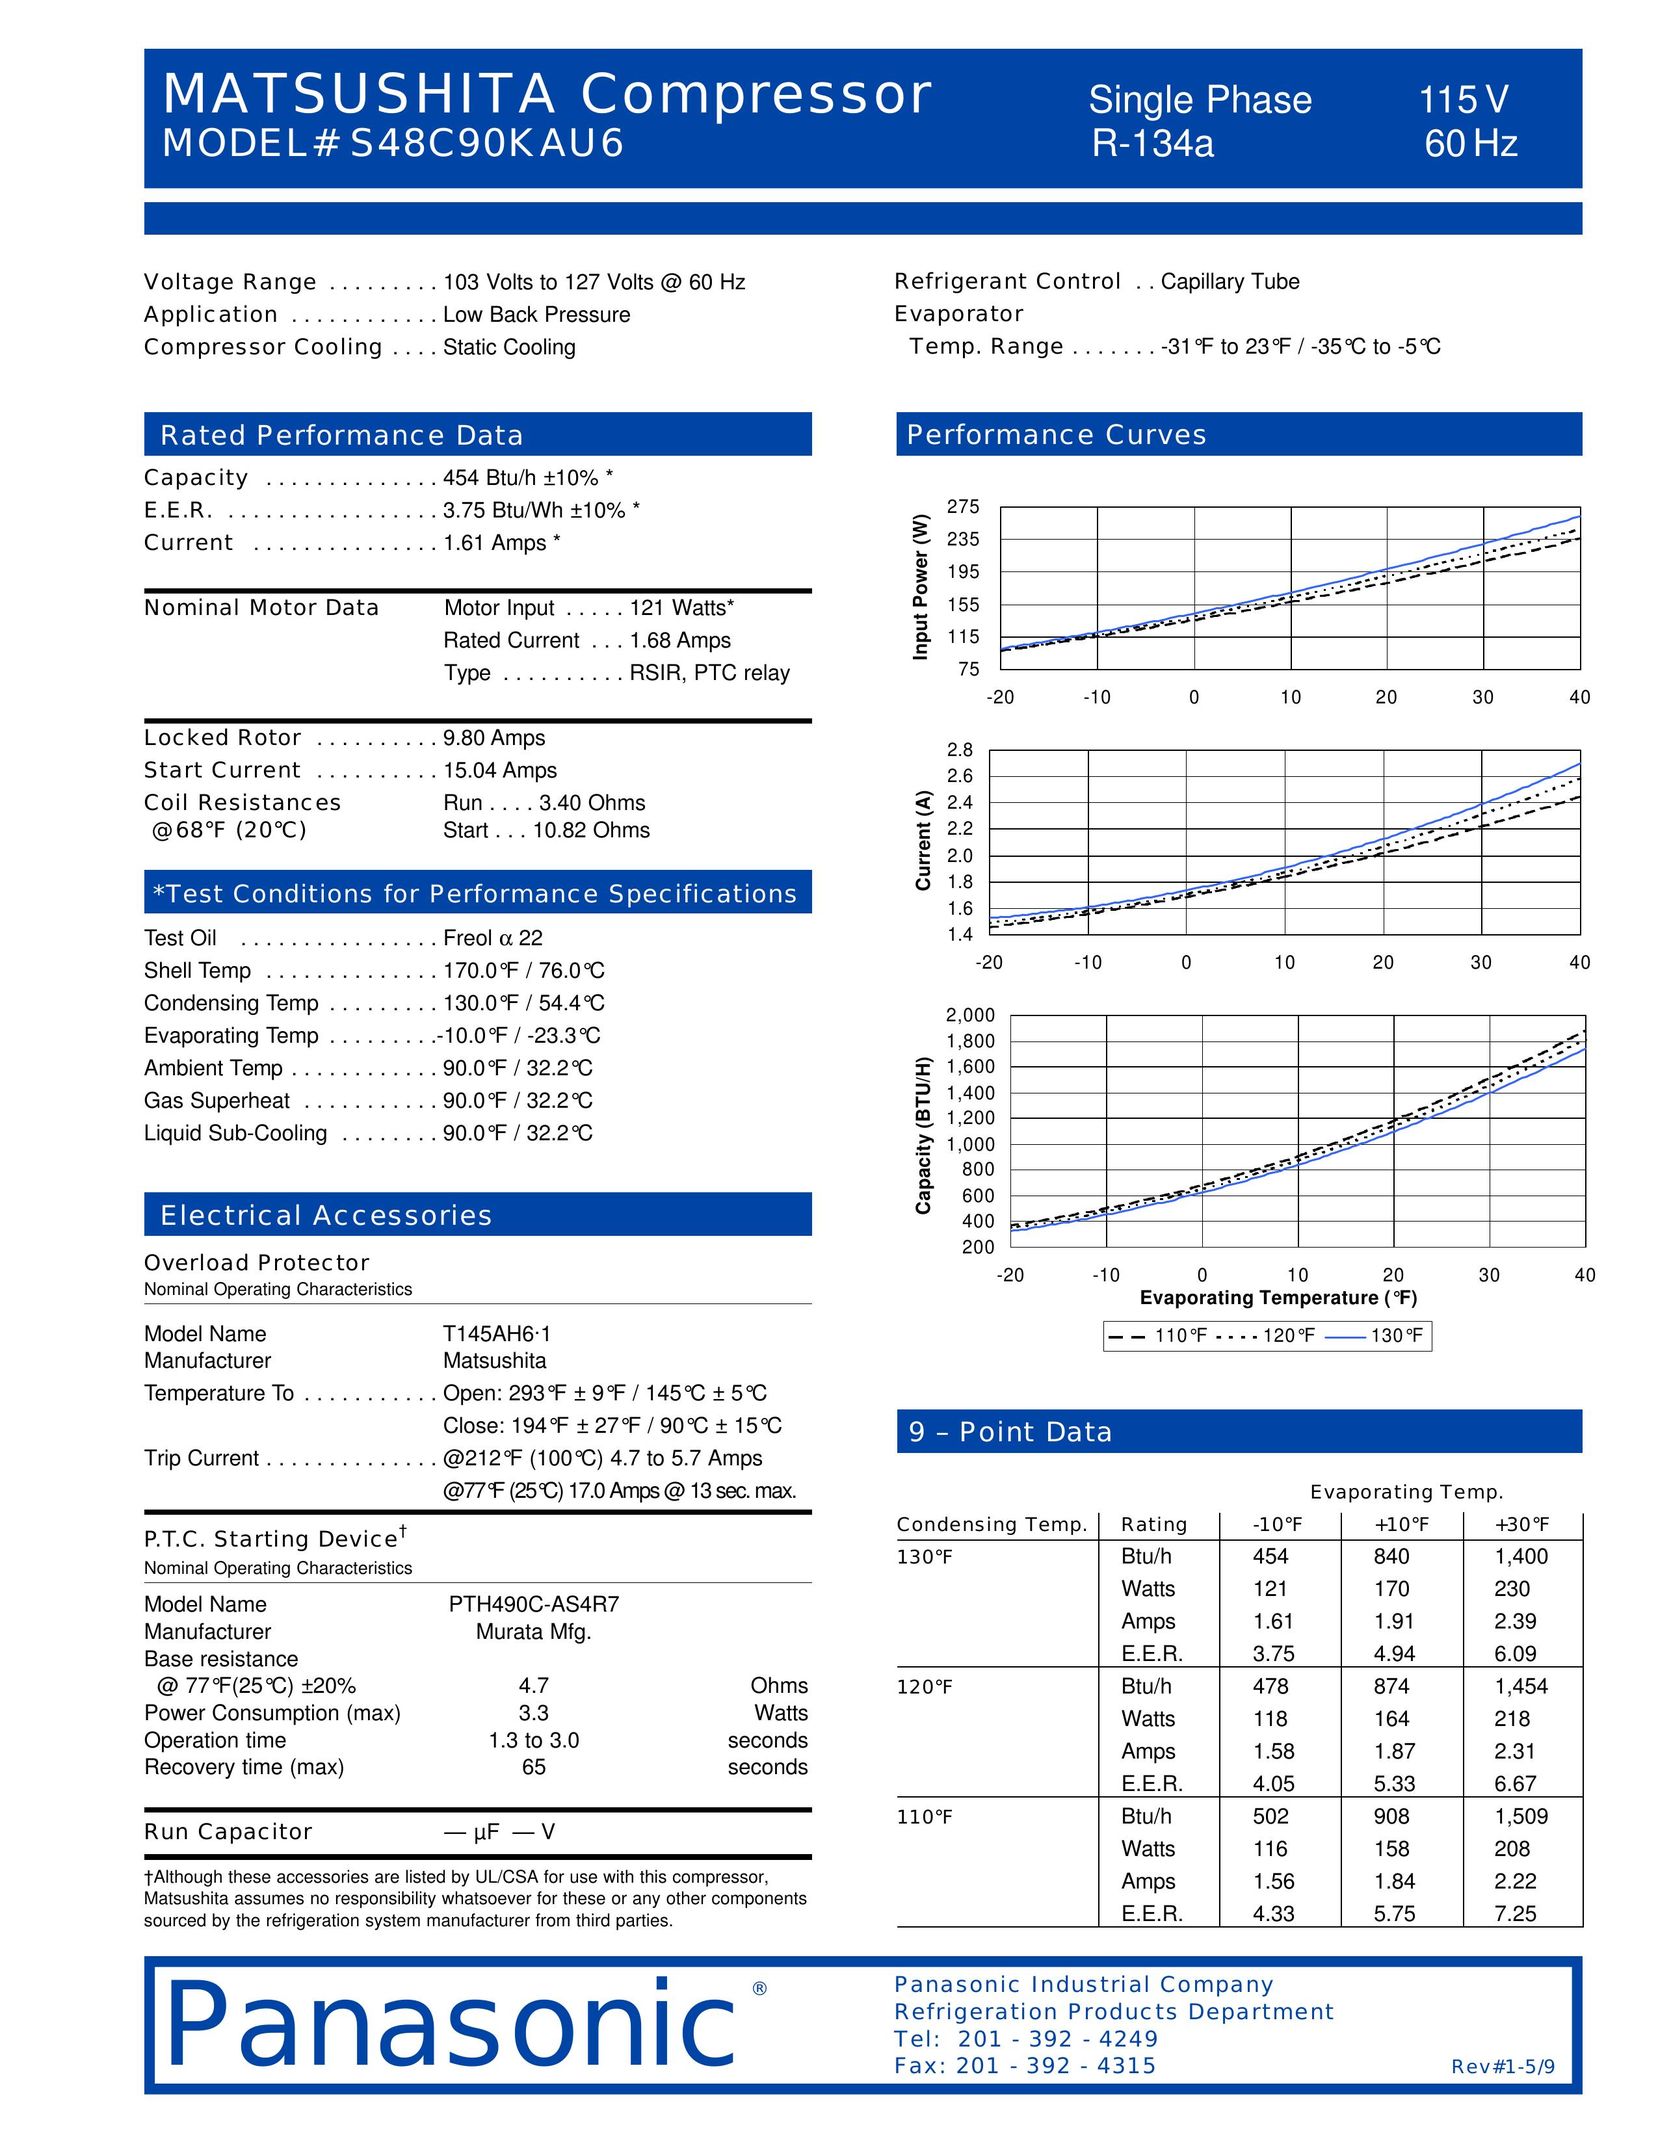 Panasonic S48C90KAU6 Air Compressor User Manual